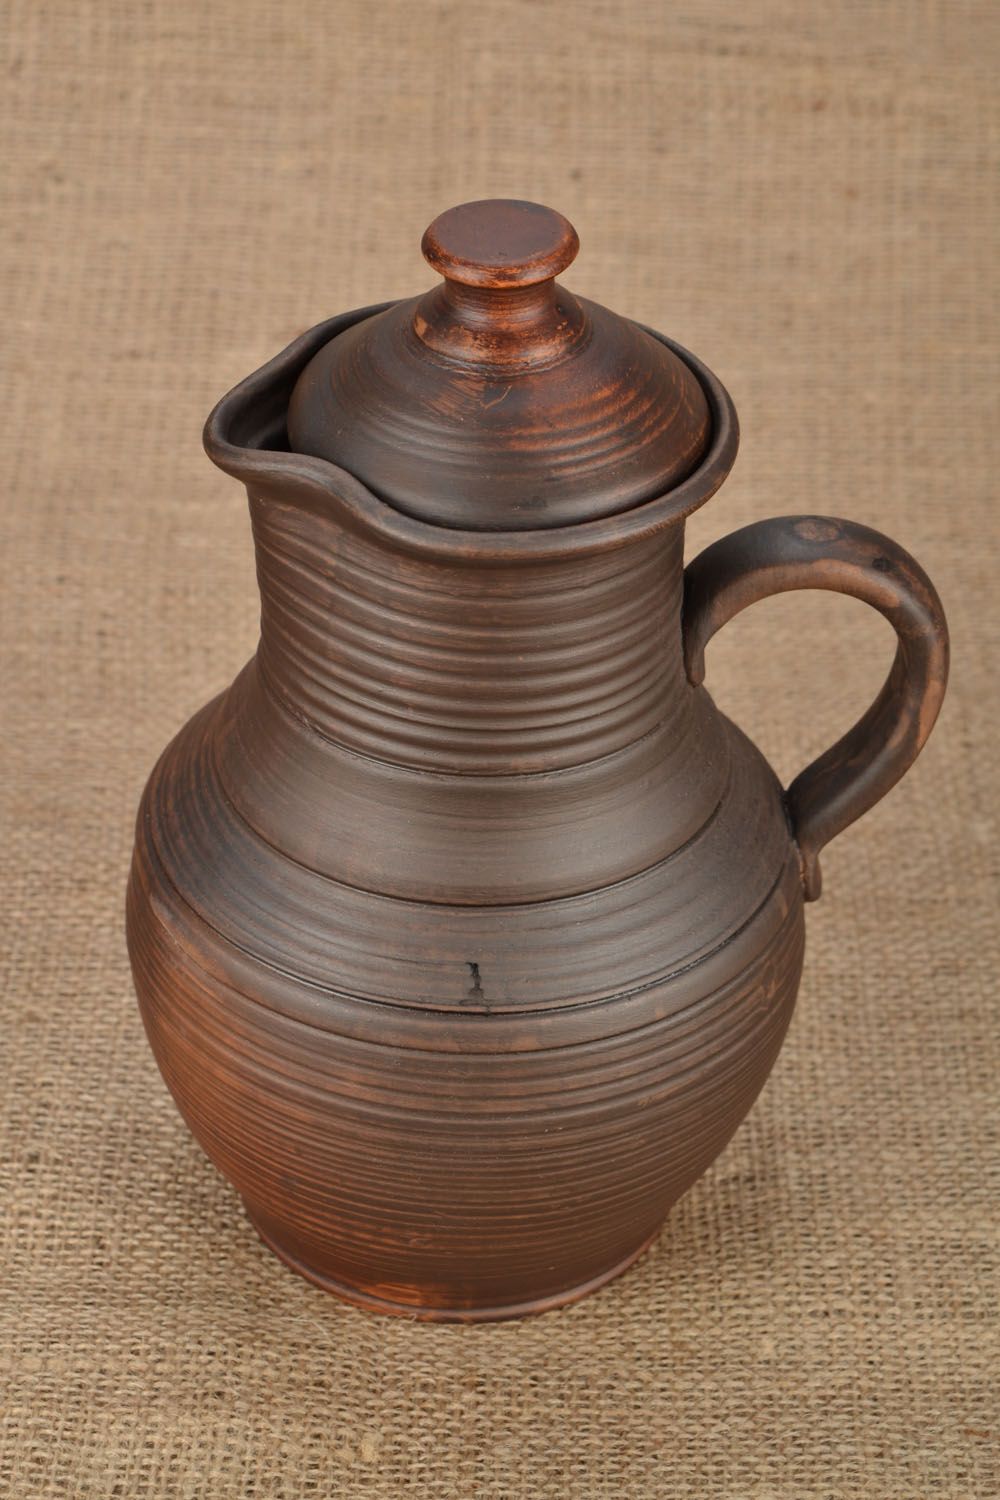 45 oz ceramic milk jug with handle and lid in dark brown color 1,87 lb photo 1